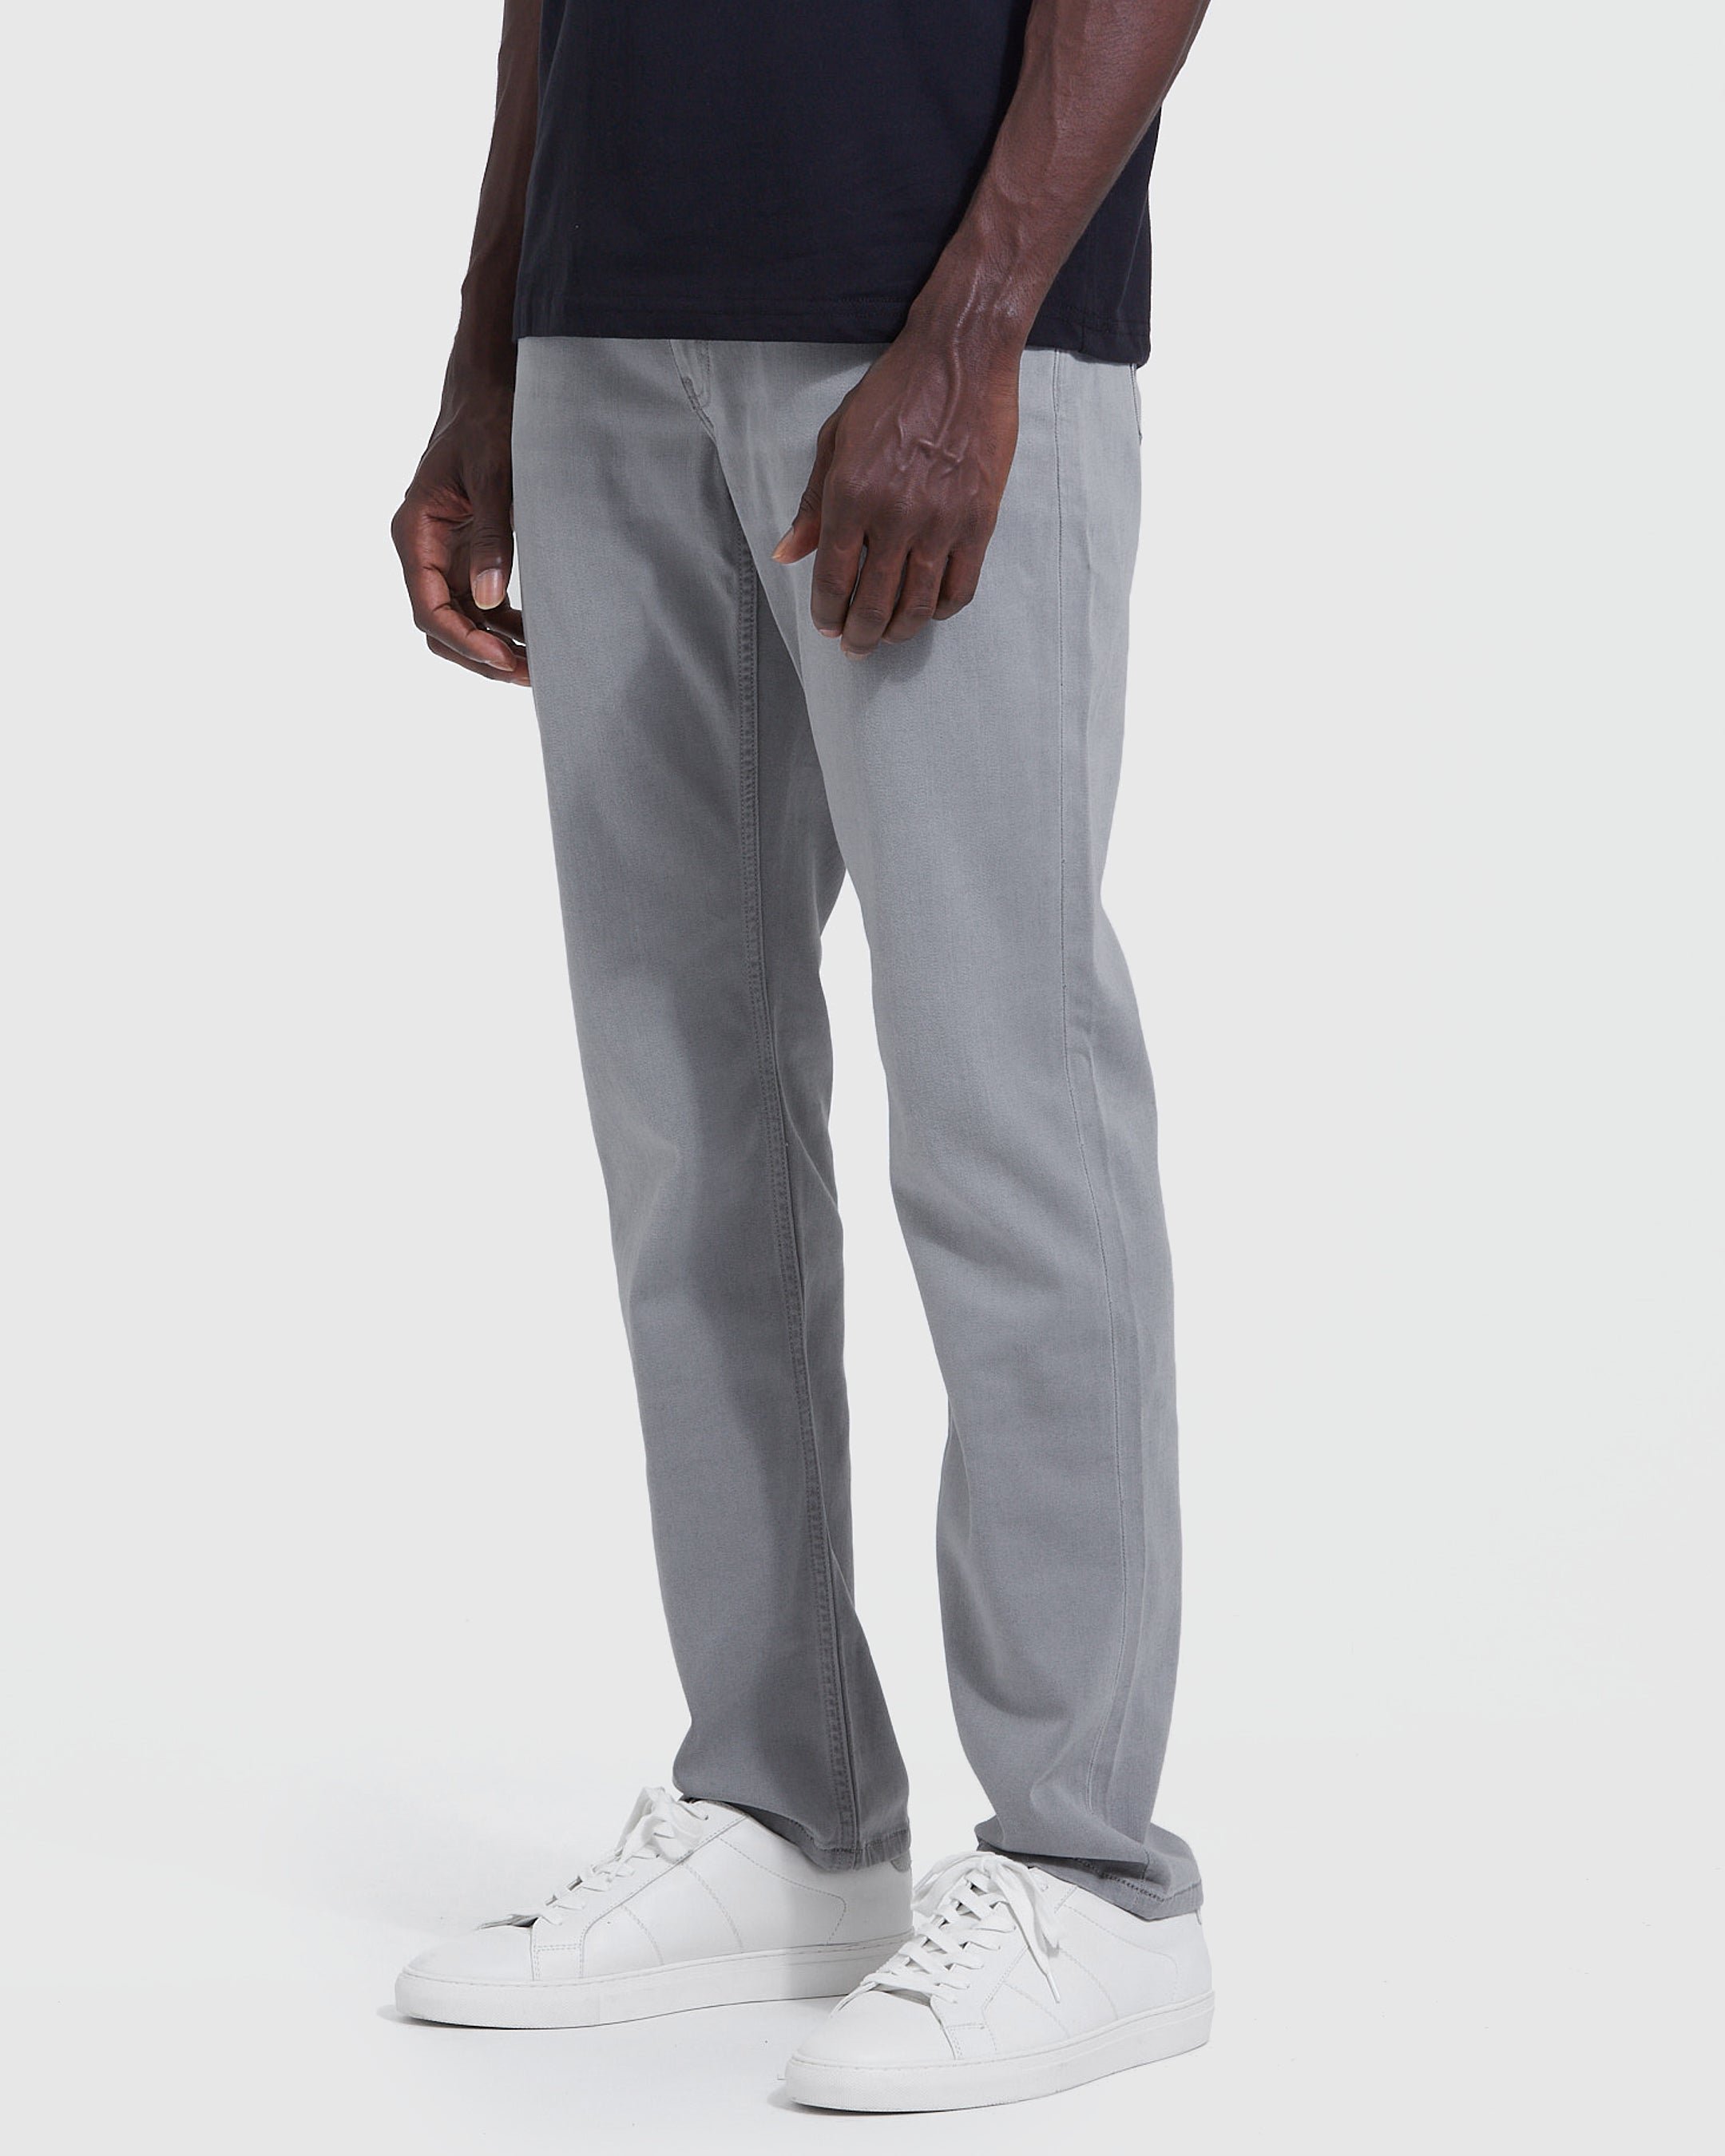 Medium Gray Wash Straight Fit Comfort Jeans